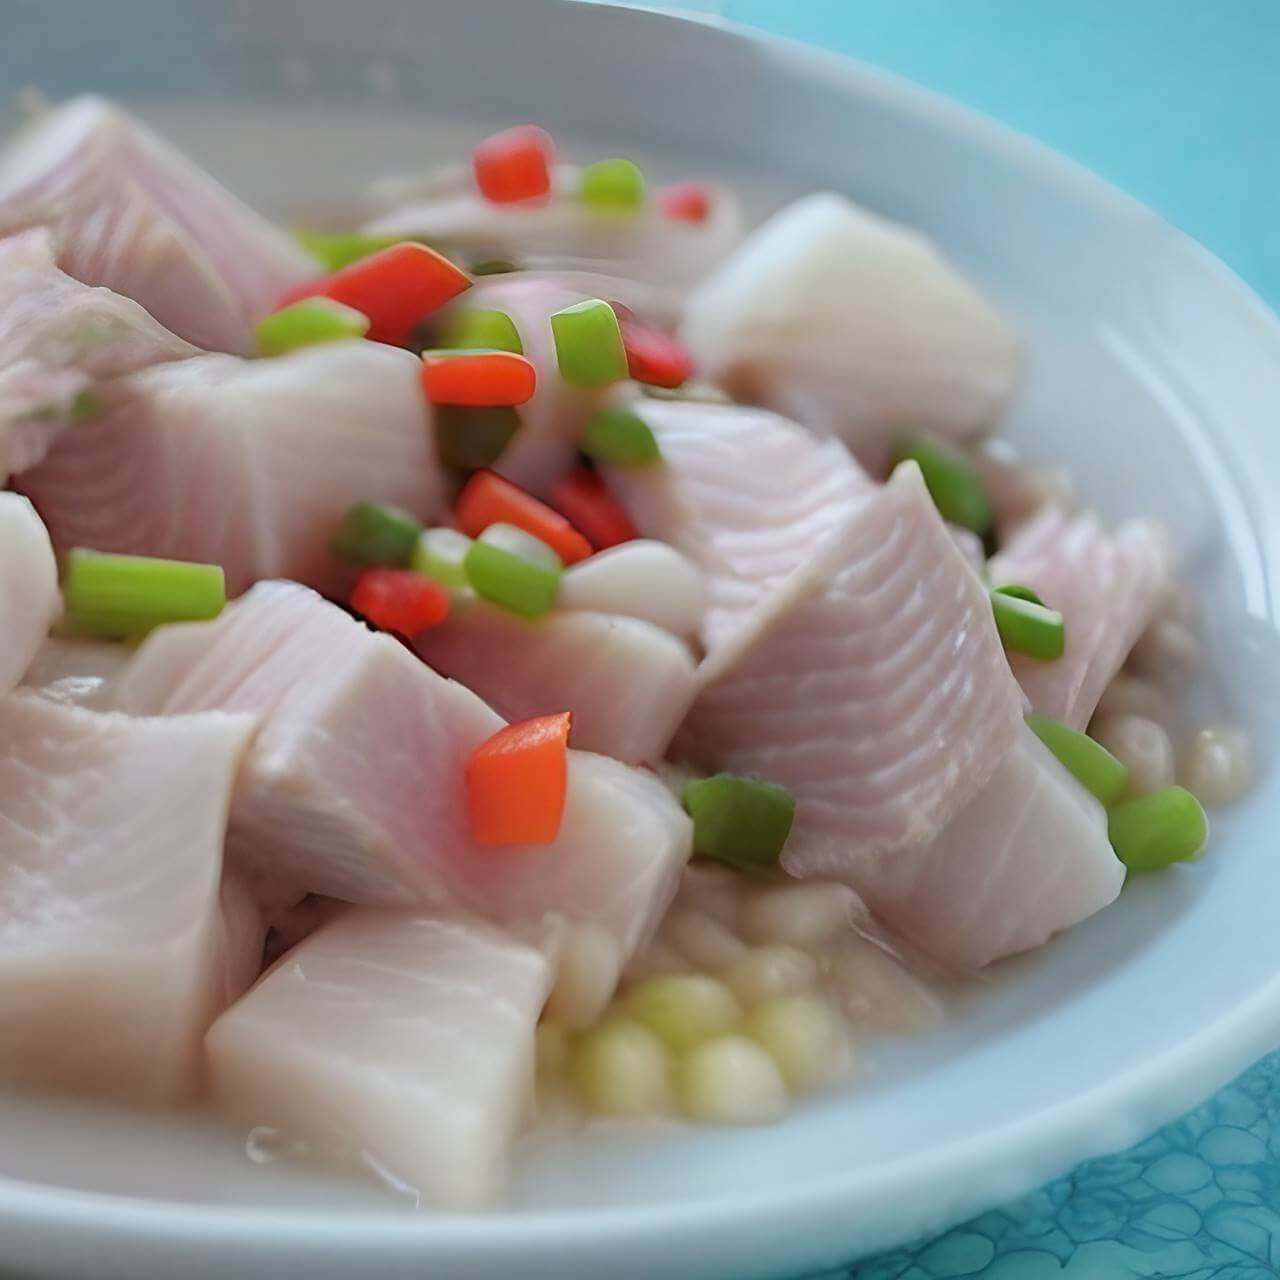 Fish Kinilaw meal